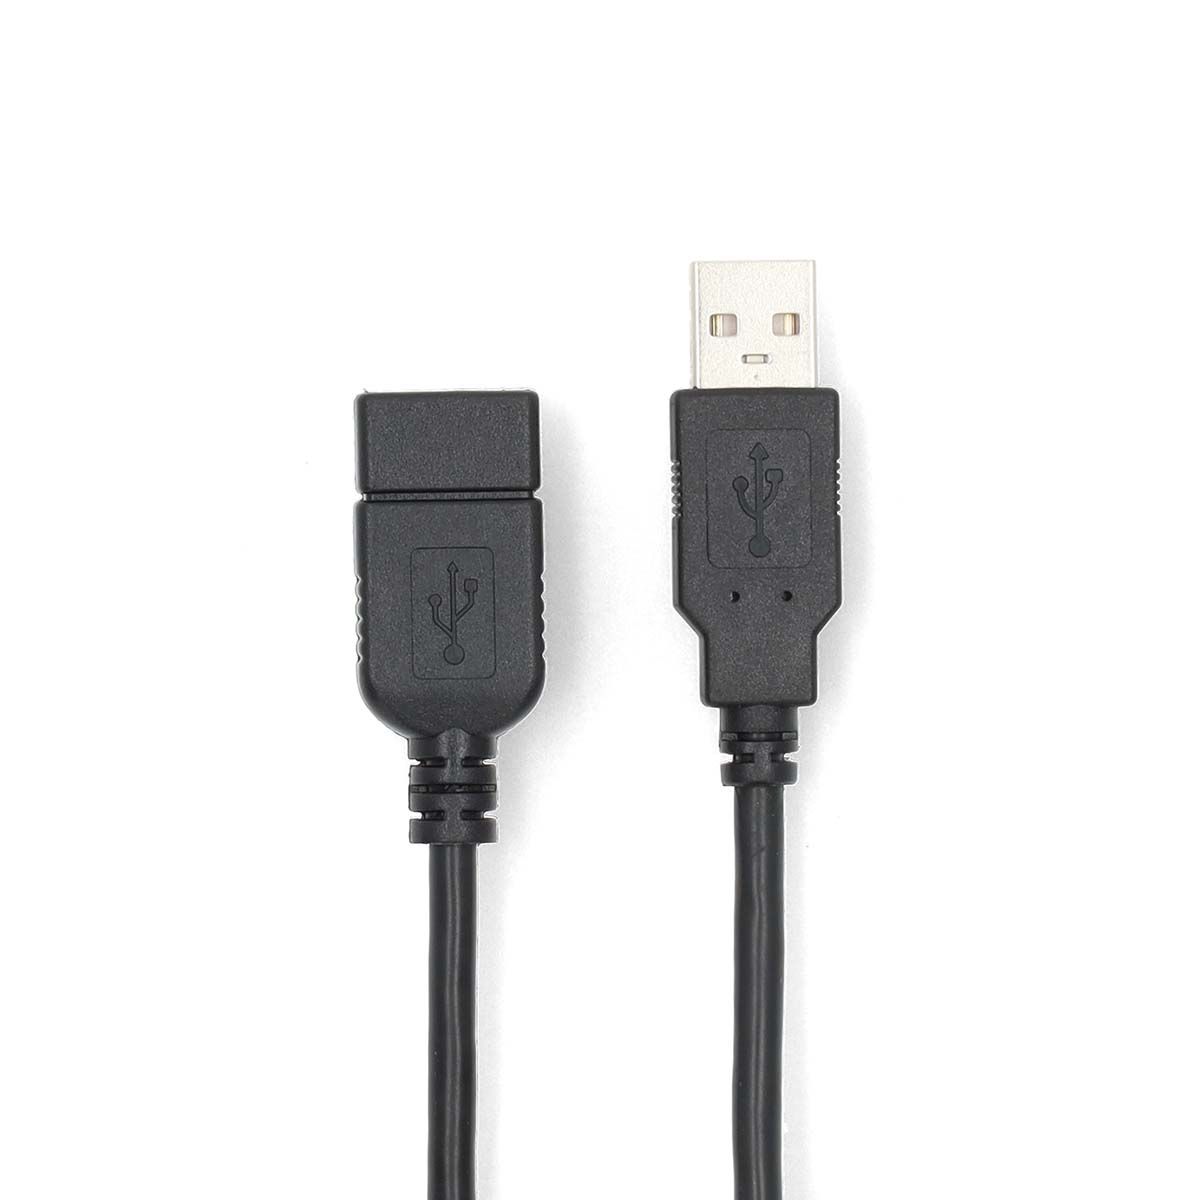 Extension cable usbA M - usbA F  (USB 2.0) 1 meter black